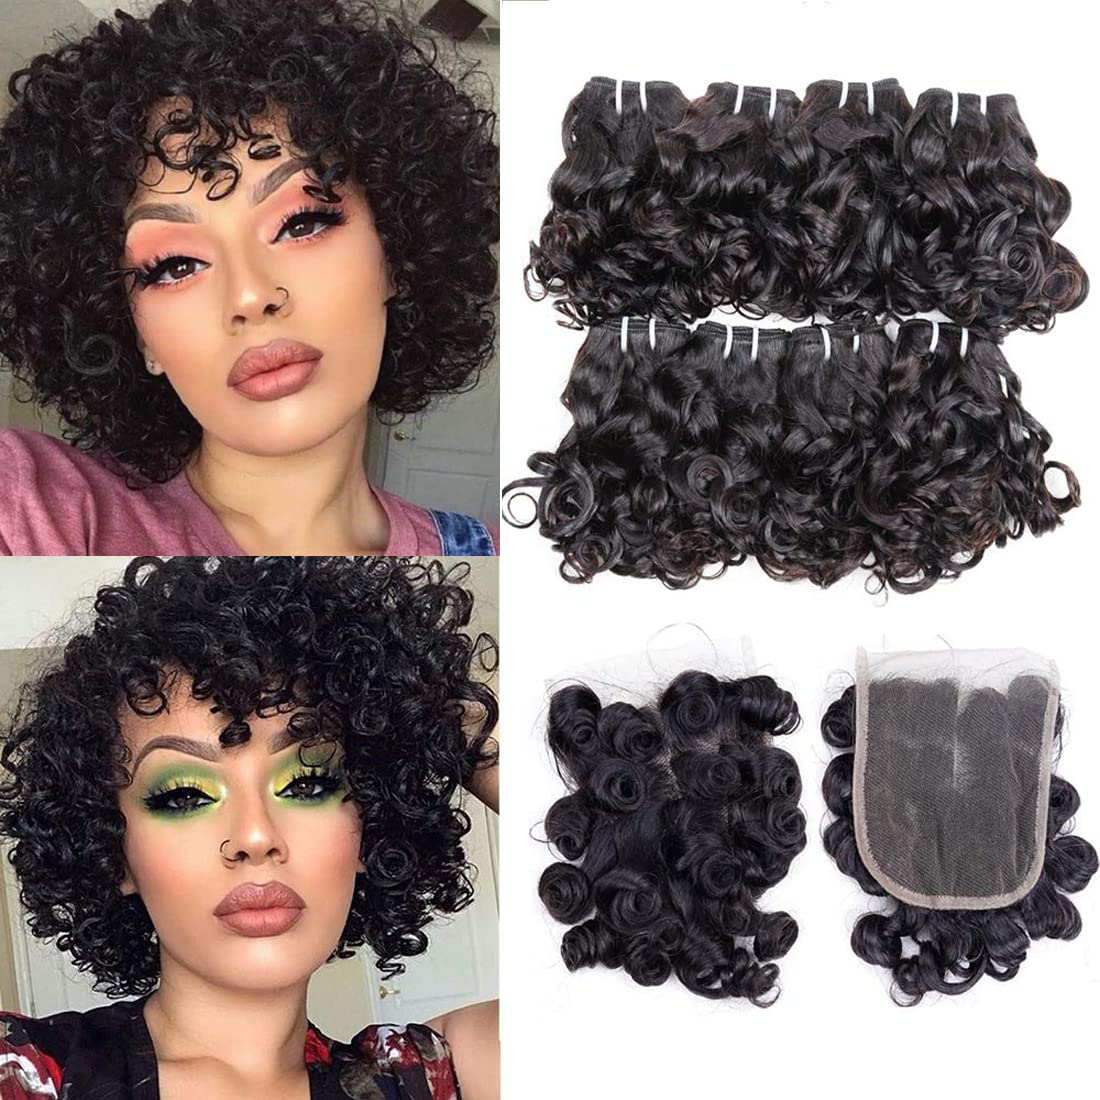 Peruvian Curly Hair Bundles Short Bob Curly Human Hair Bundles with Closure  10A Ocean Weave 8 Bundles with 4x4 Closure(8 8 8 8 8 8 8 8+8)25g/Bundle  Peruvian Virgin Human Hair Bundles Natural Color 8 8 8 8 8